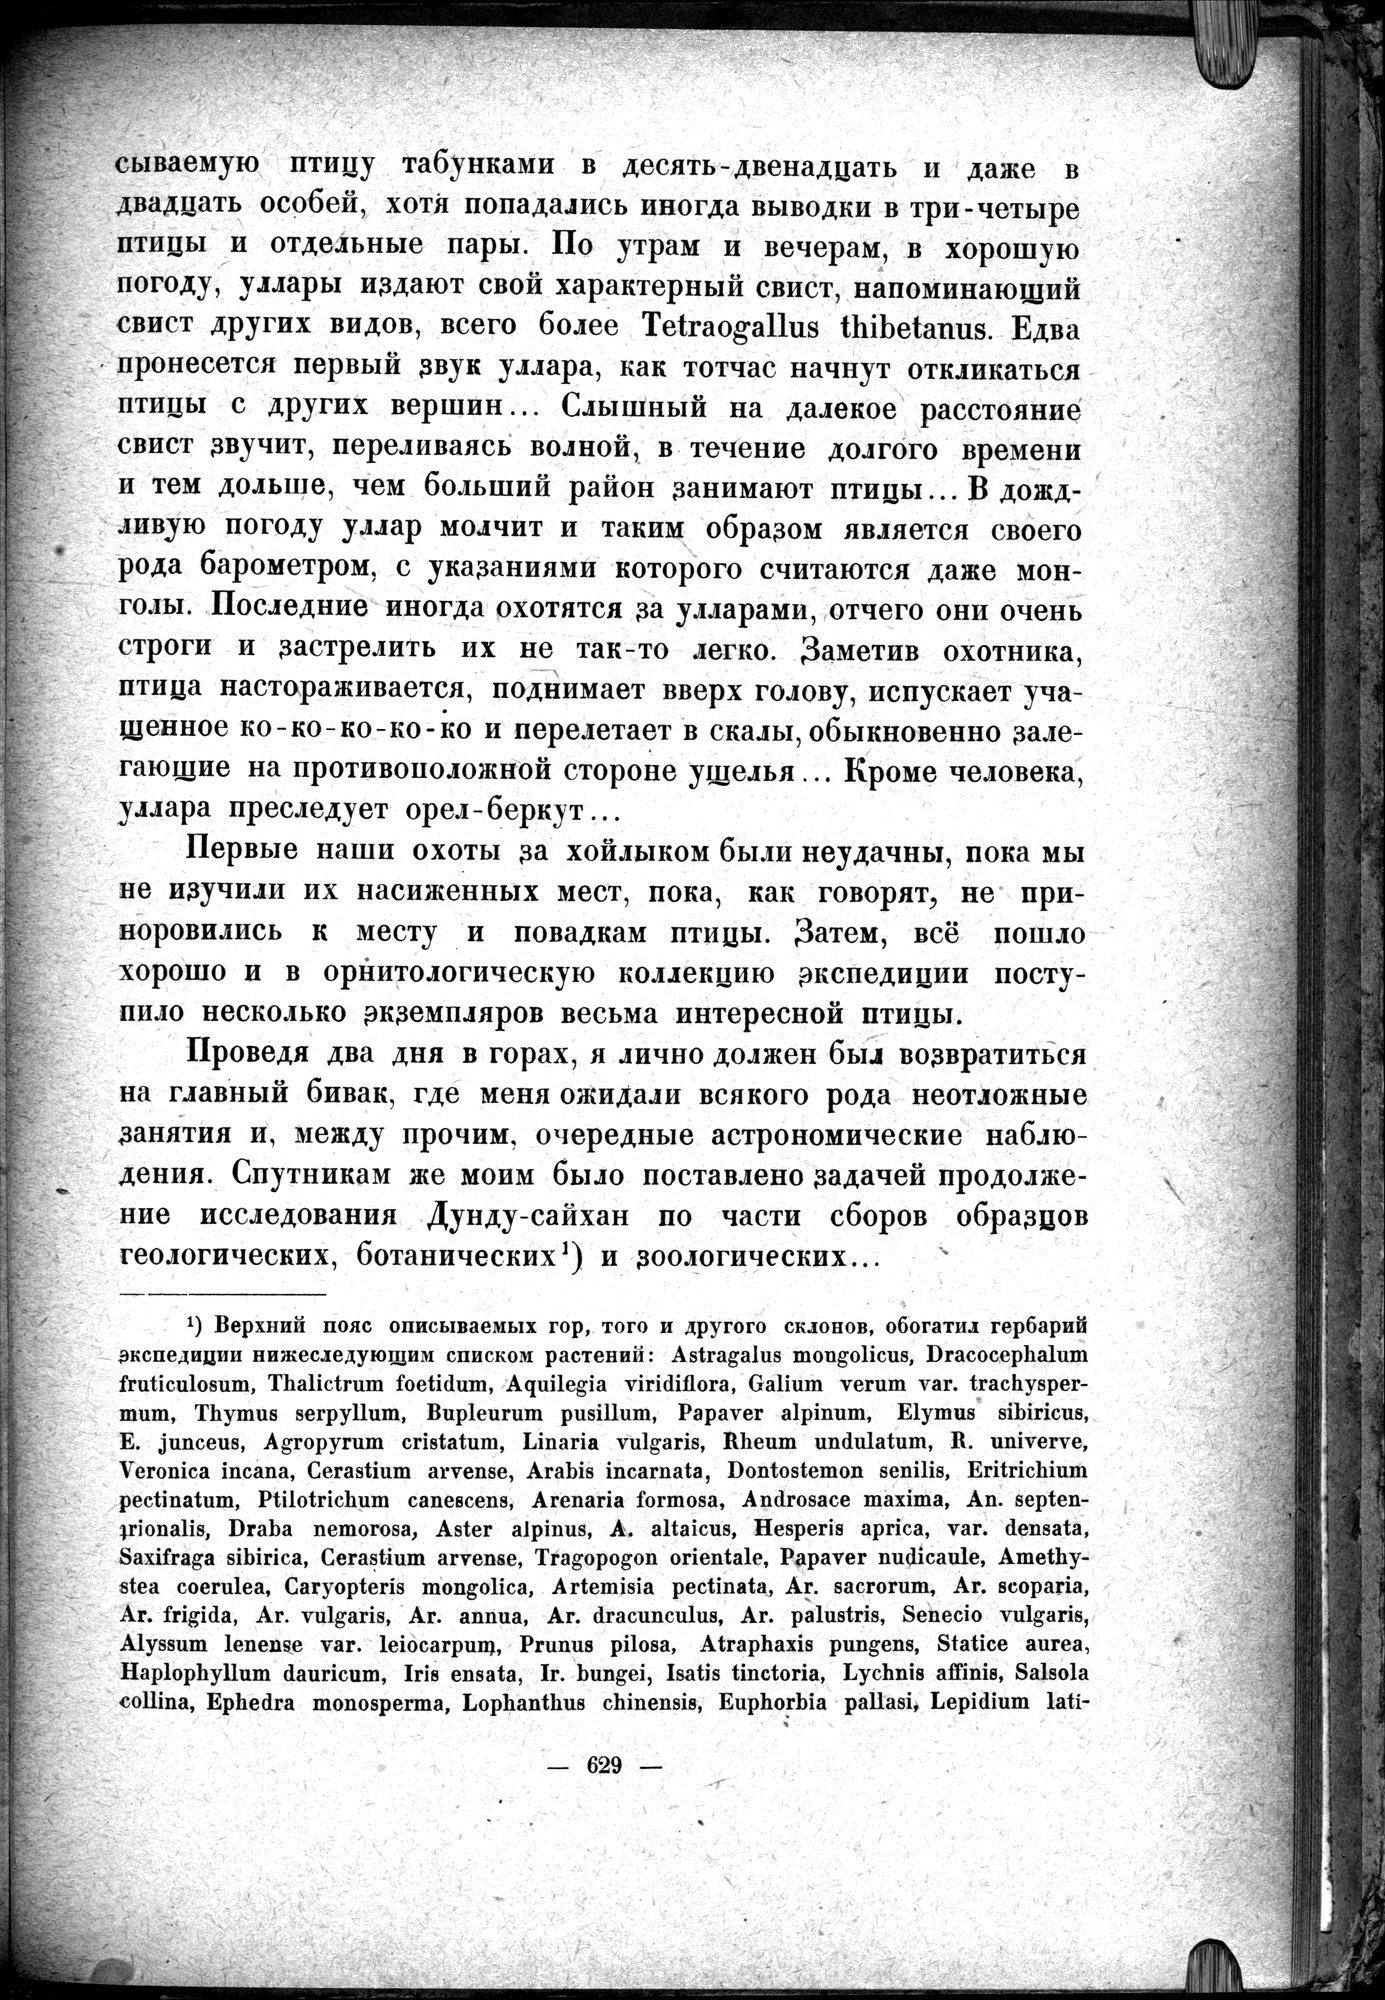 Mongoliya i Amdo i mertby gorod Khara-Khoto : vol.1 / Page 719 (Grayscale High Resolution Image)